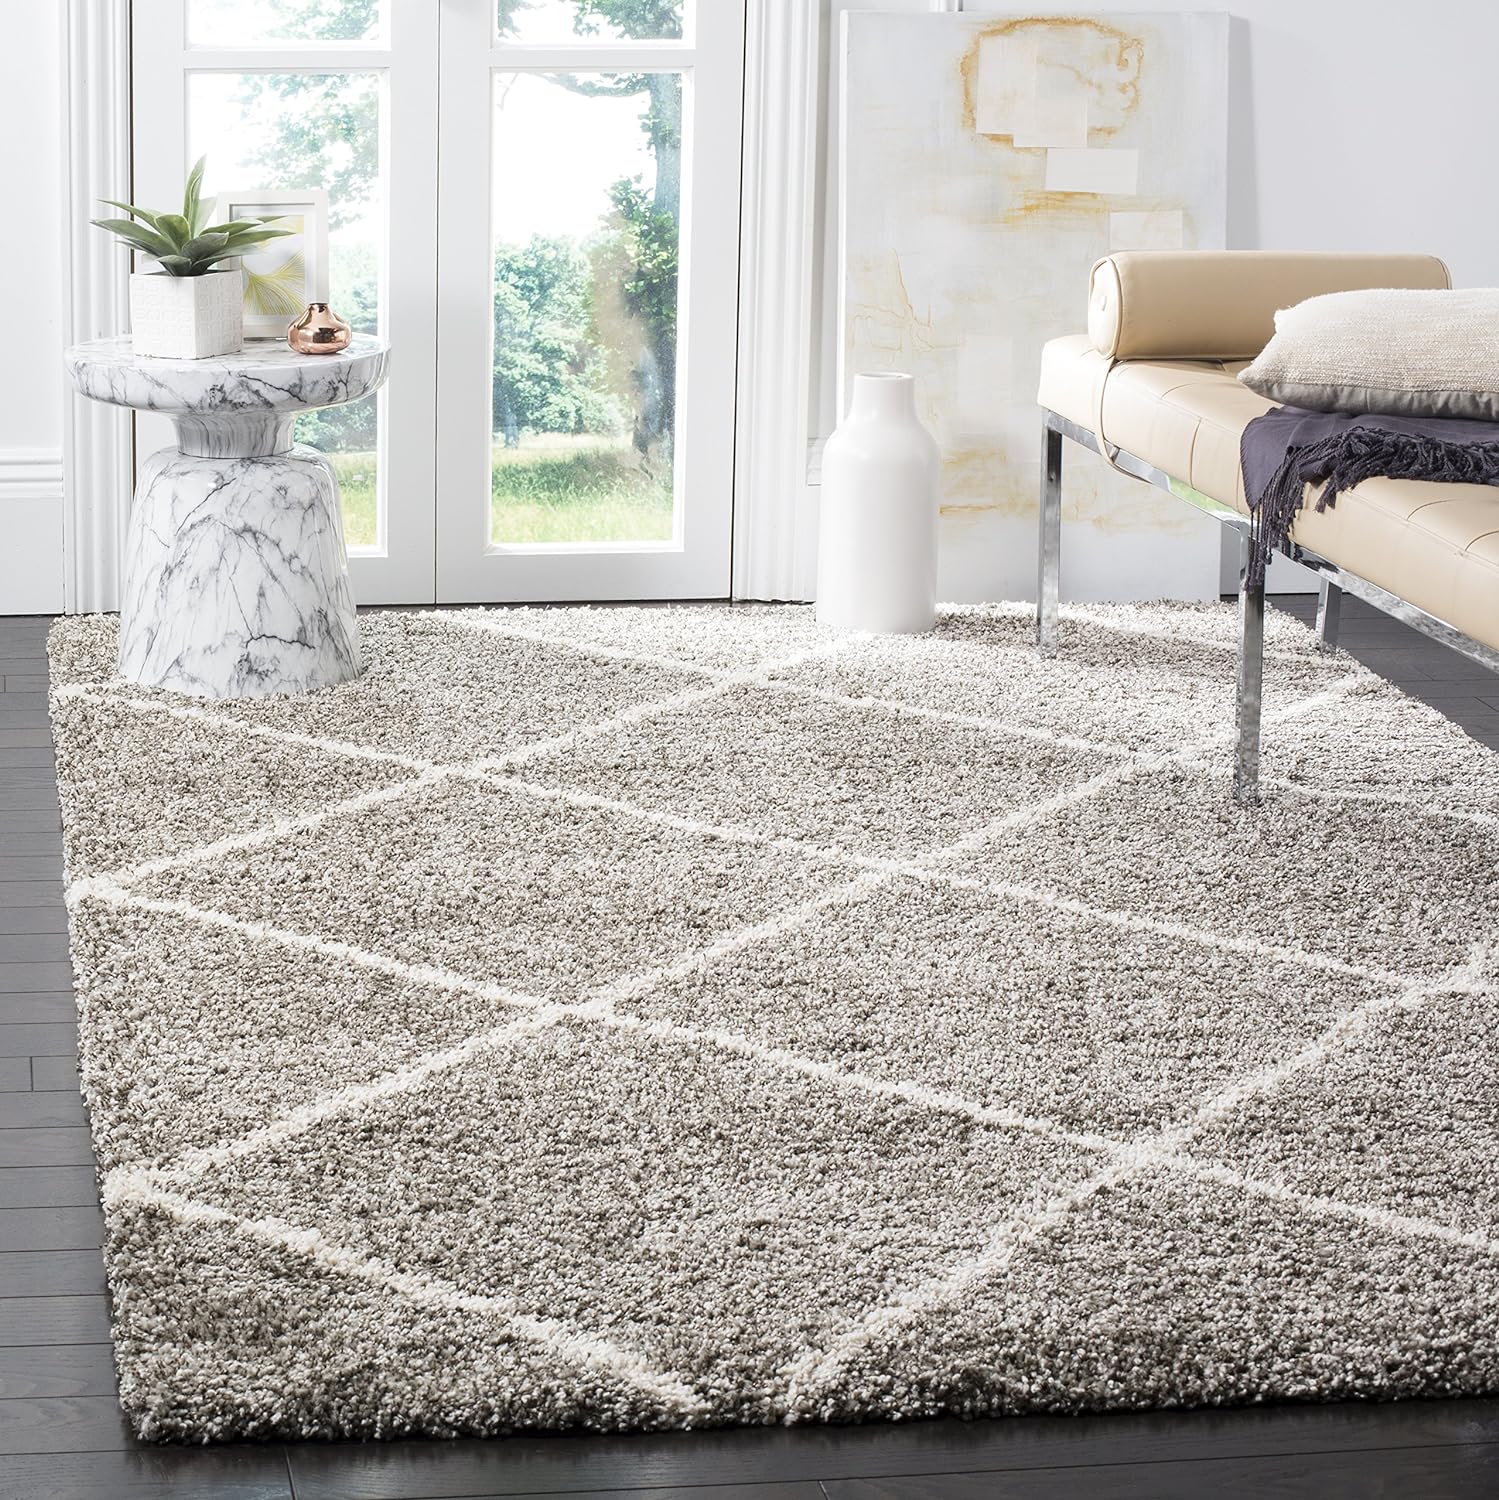 Best 3 piece rug for living room